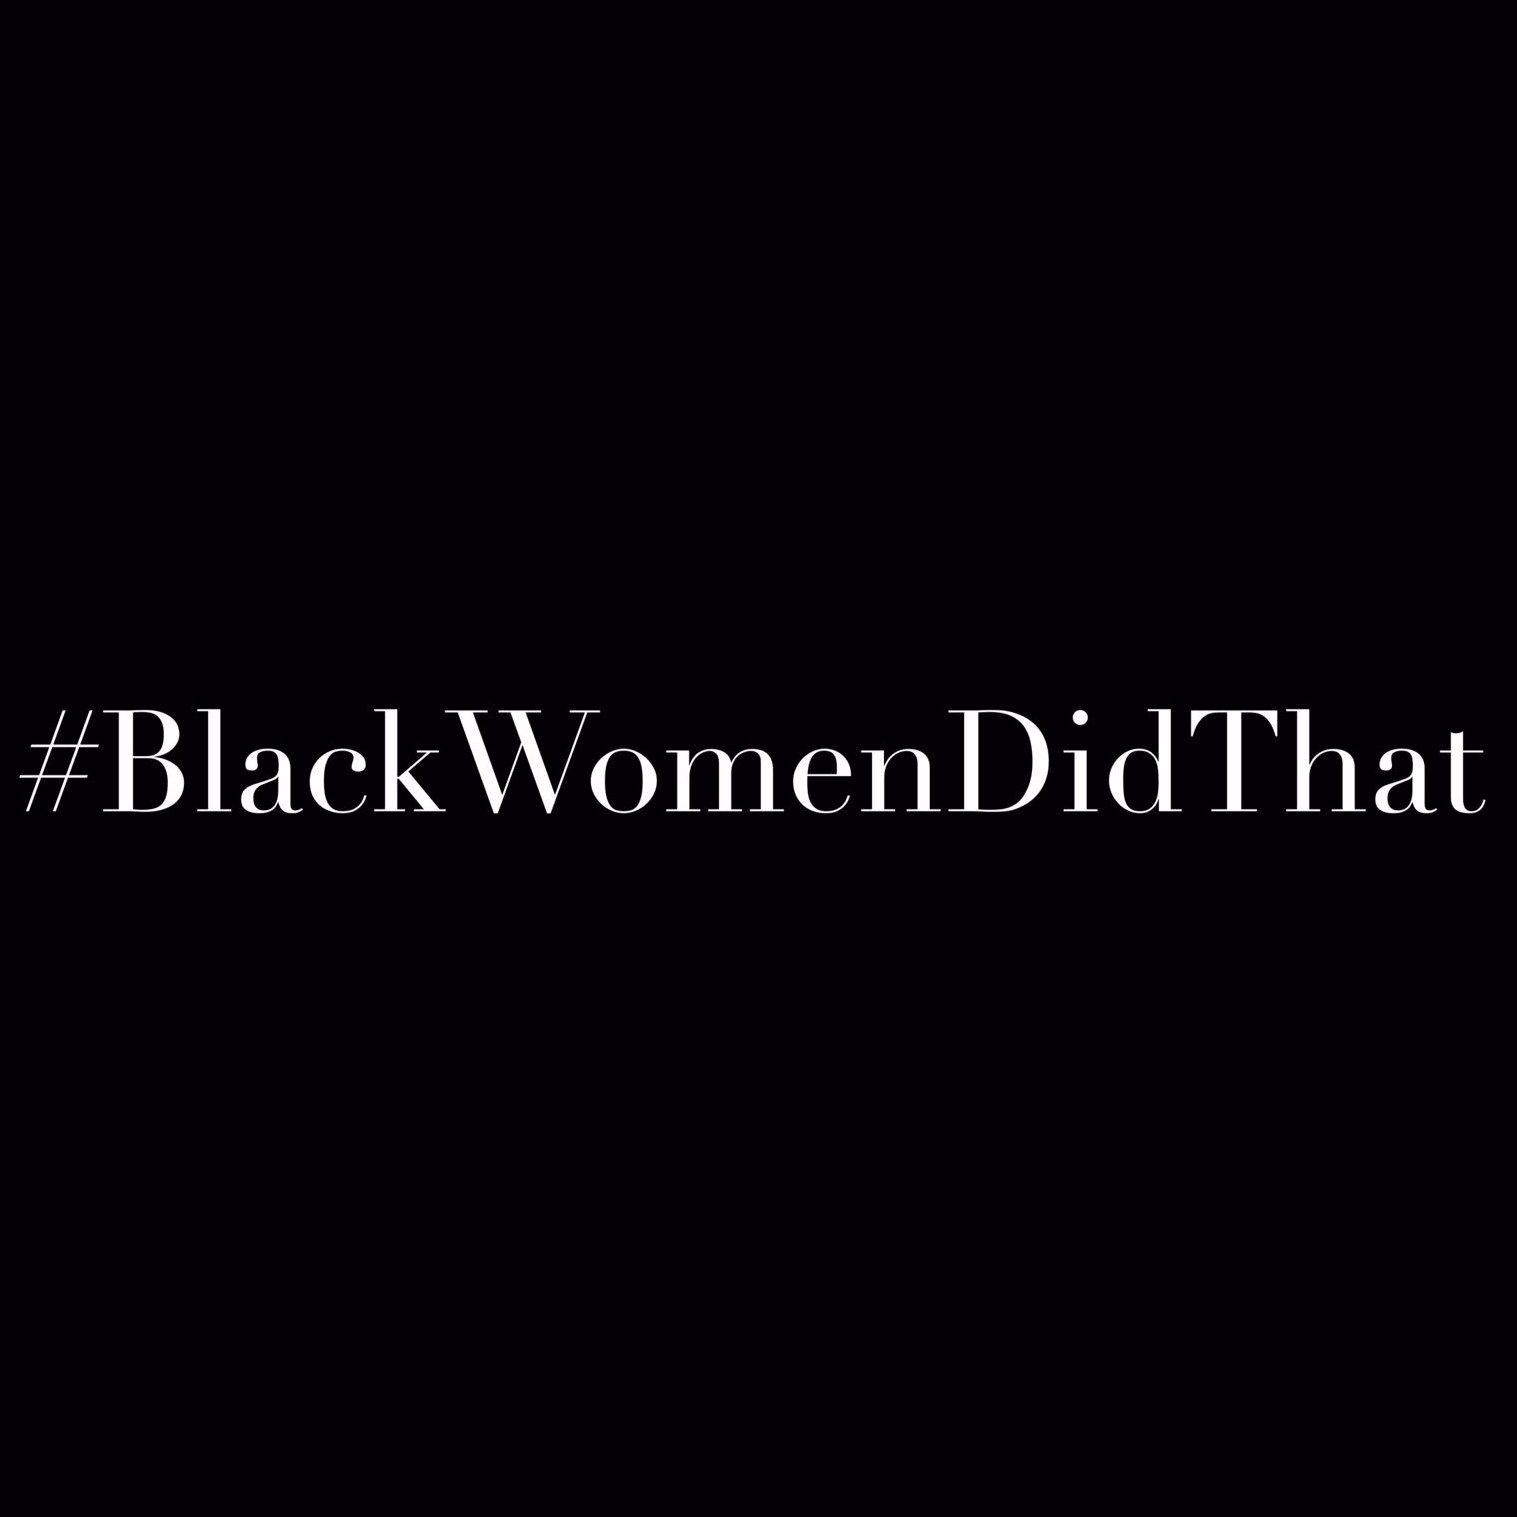 #BlackWomenDidThat - Celebrating Black women globally. Created by @anthoknees, @MyloMU, and @BitterBlue55 // Contact: BlackWomenDidThat@gmail.com